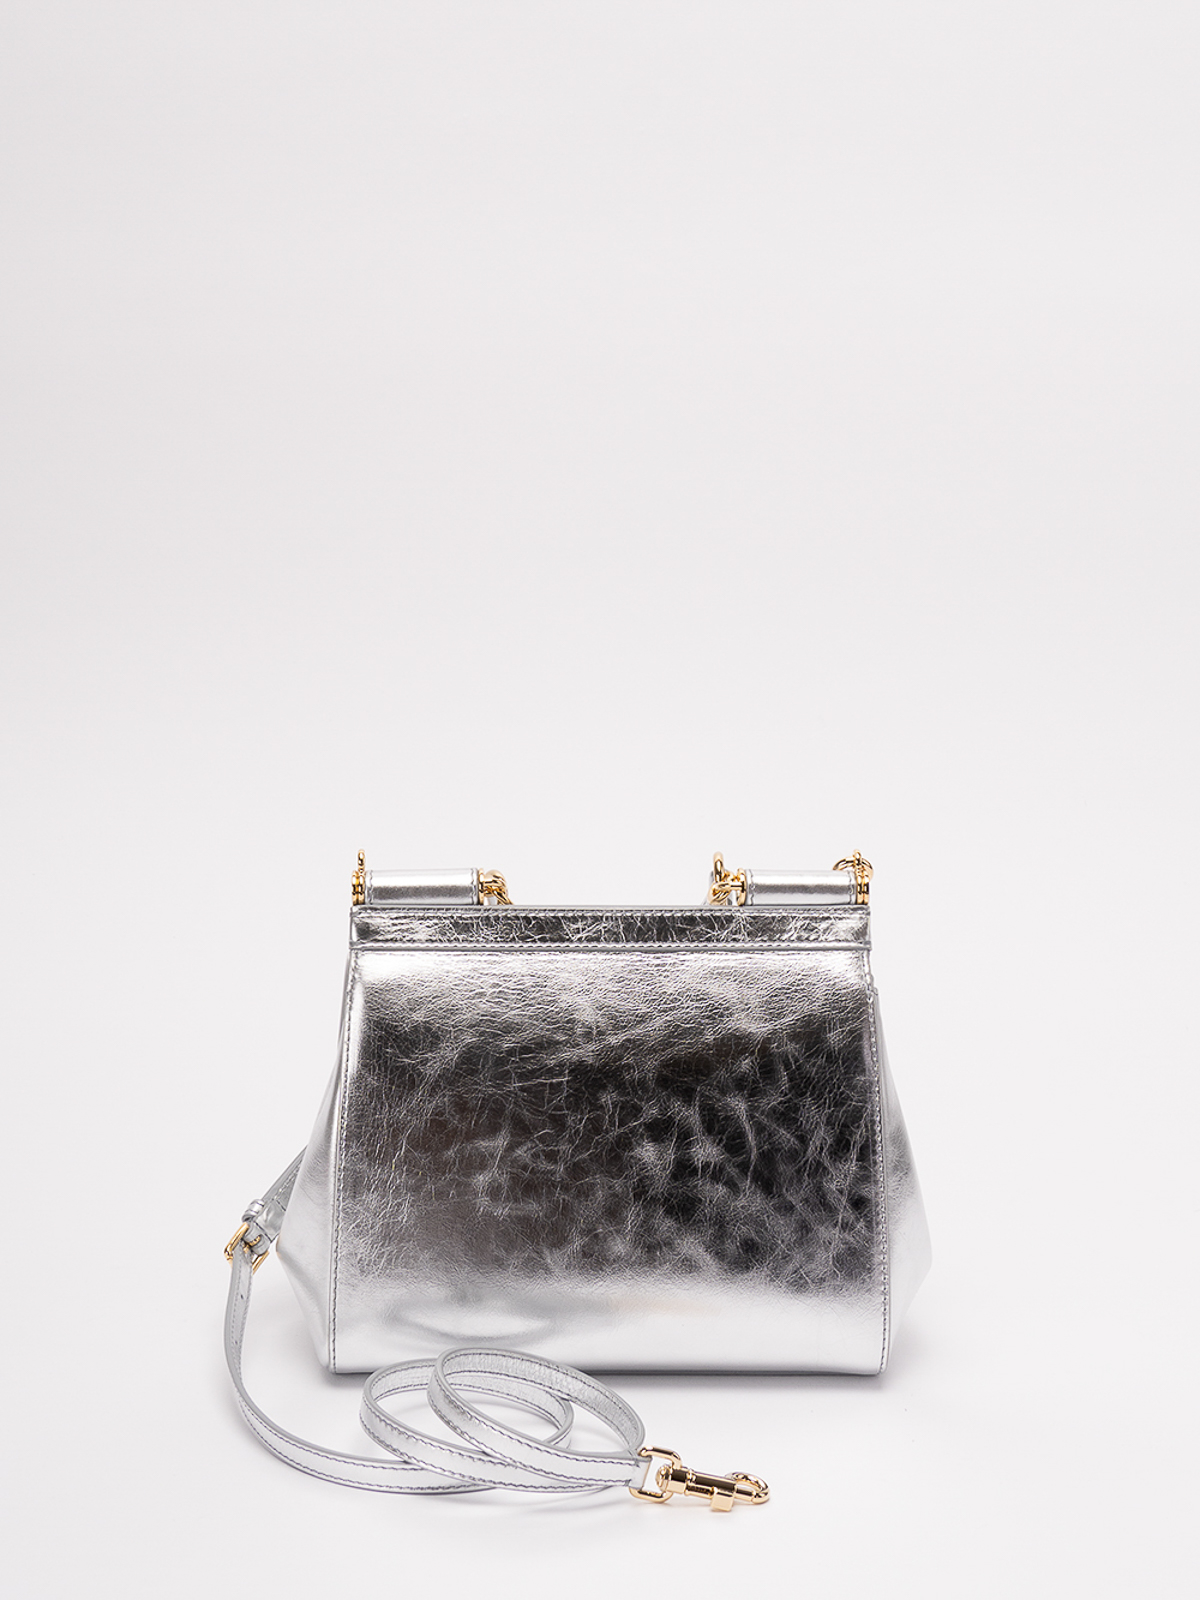 Dolce&Gabbana Small Sicily Bag Leather Black, Mini Bag